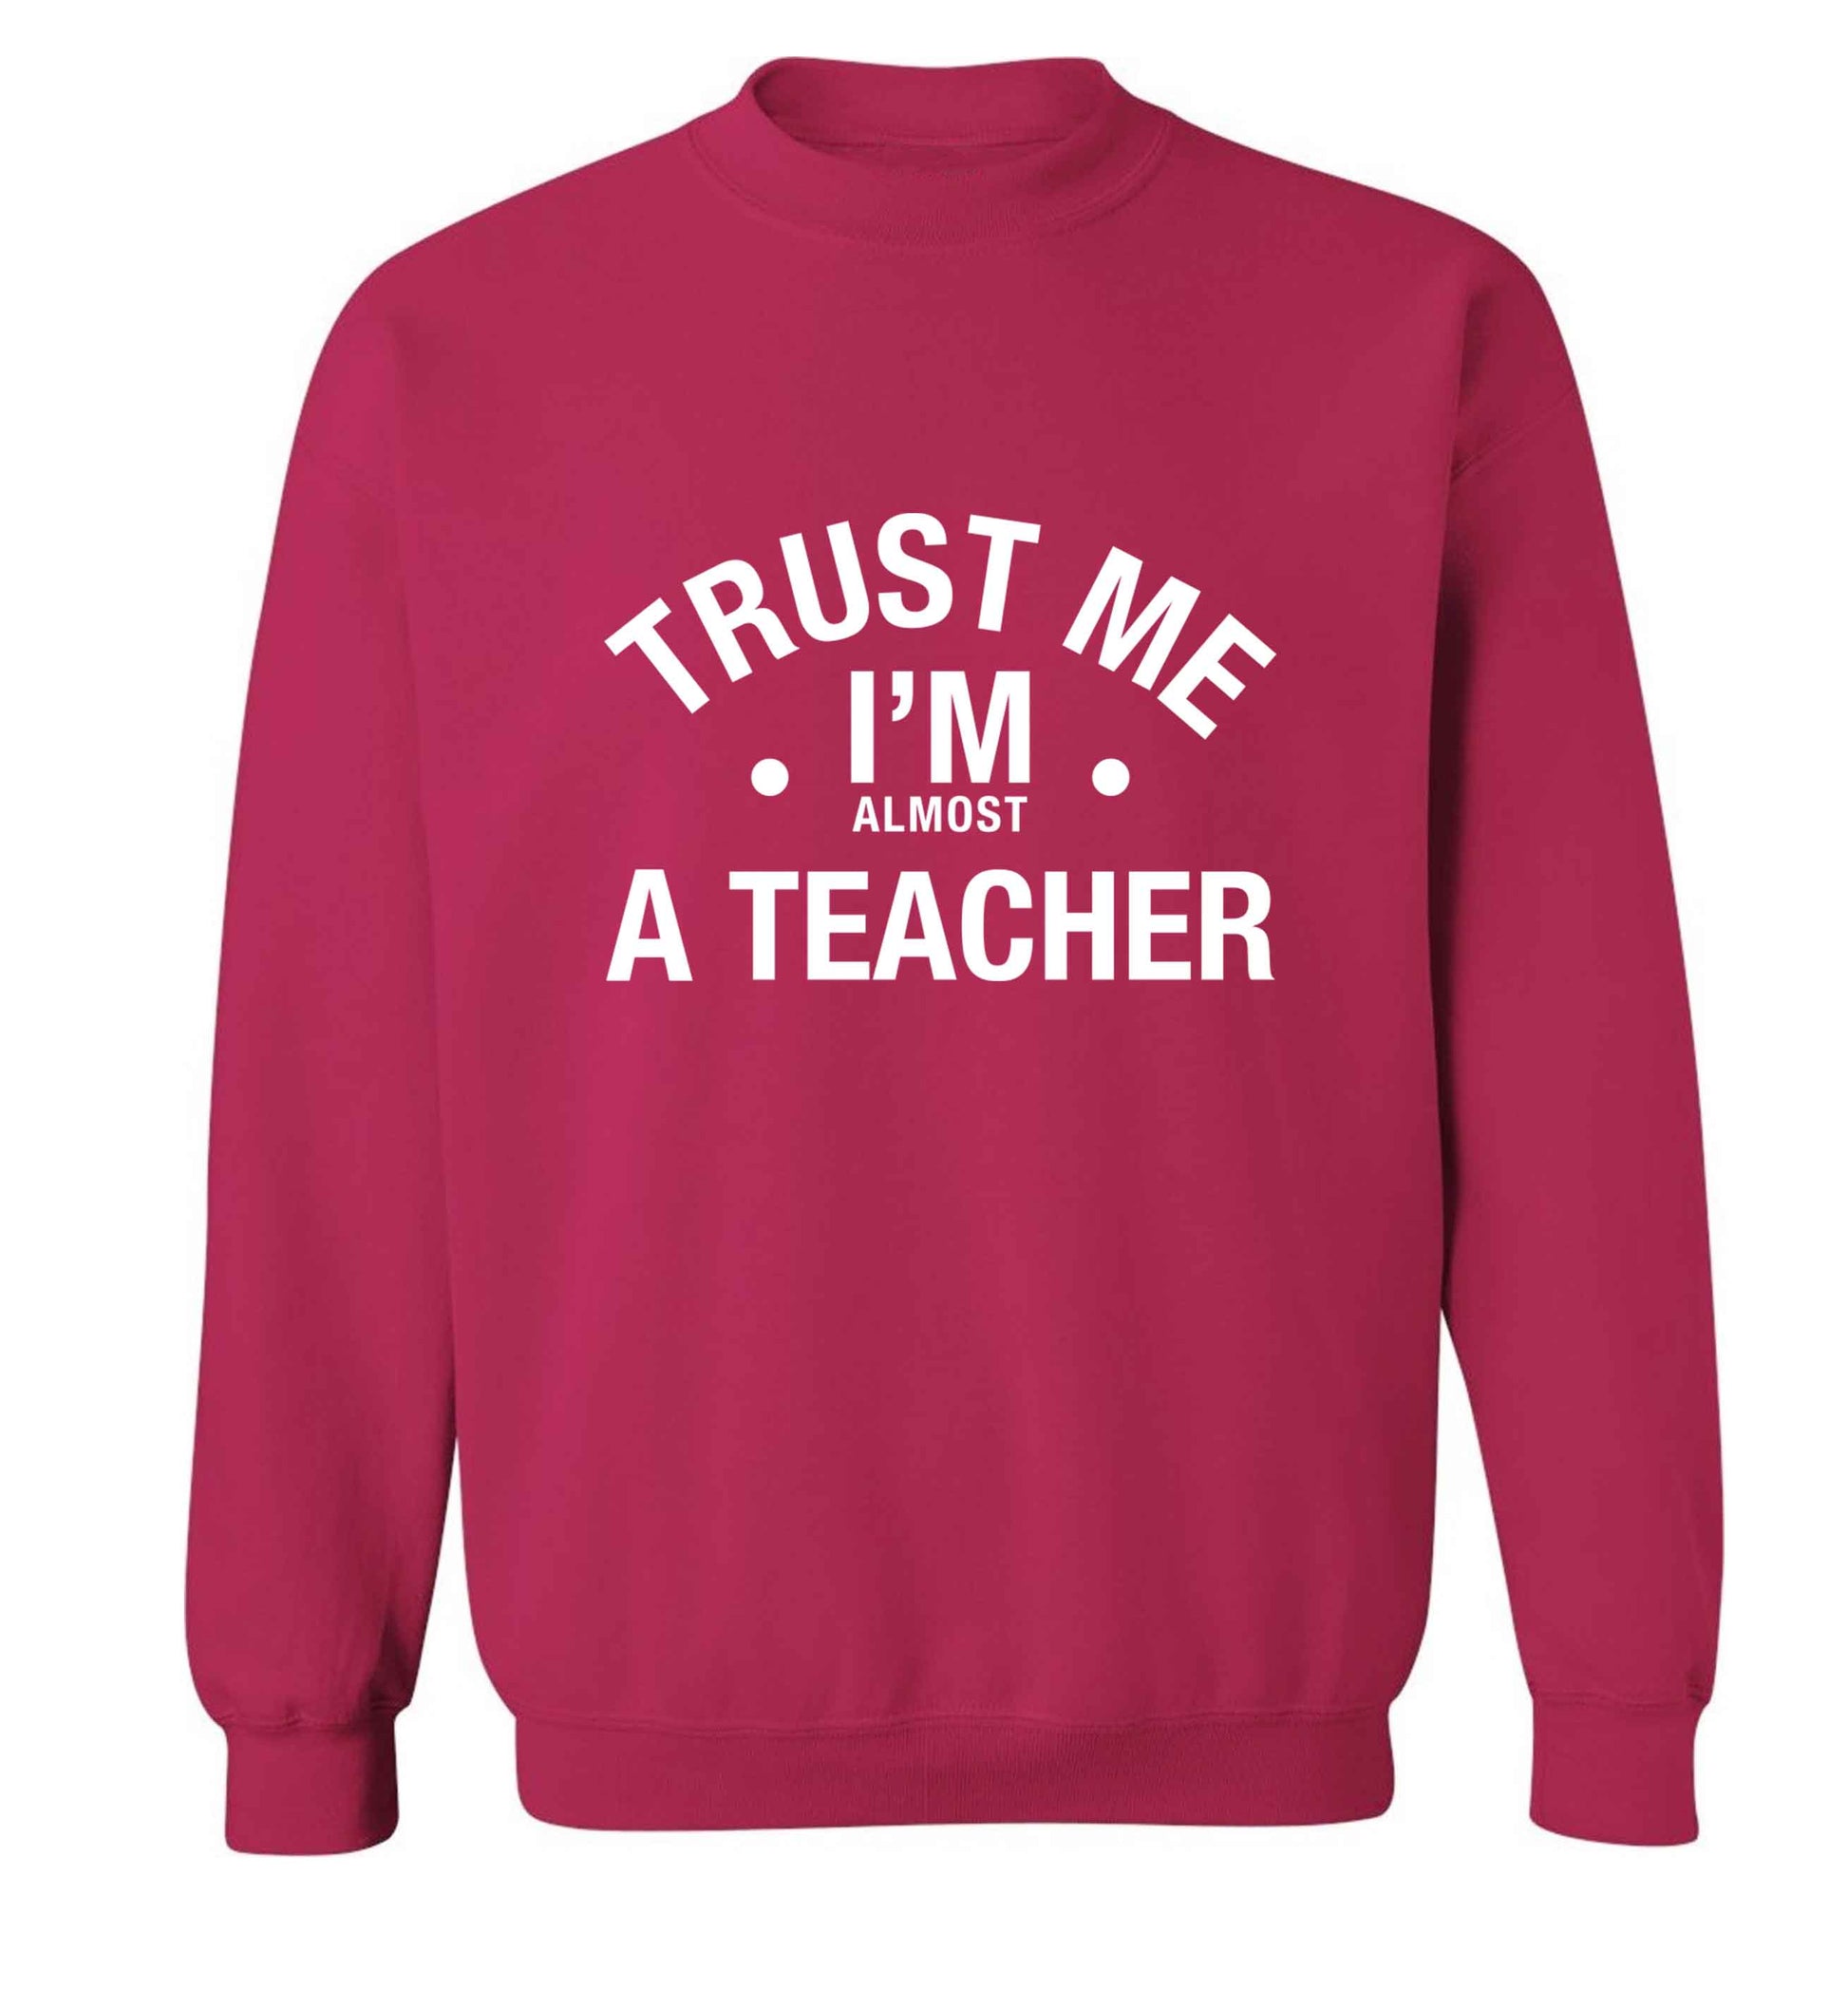 Trust me I'm almost a teacher adult's unisex pink sweater 2XL